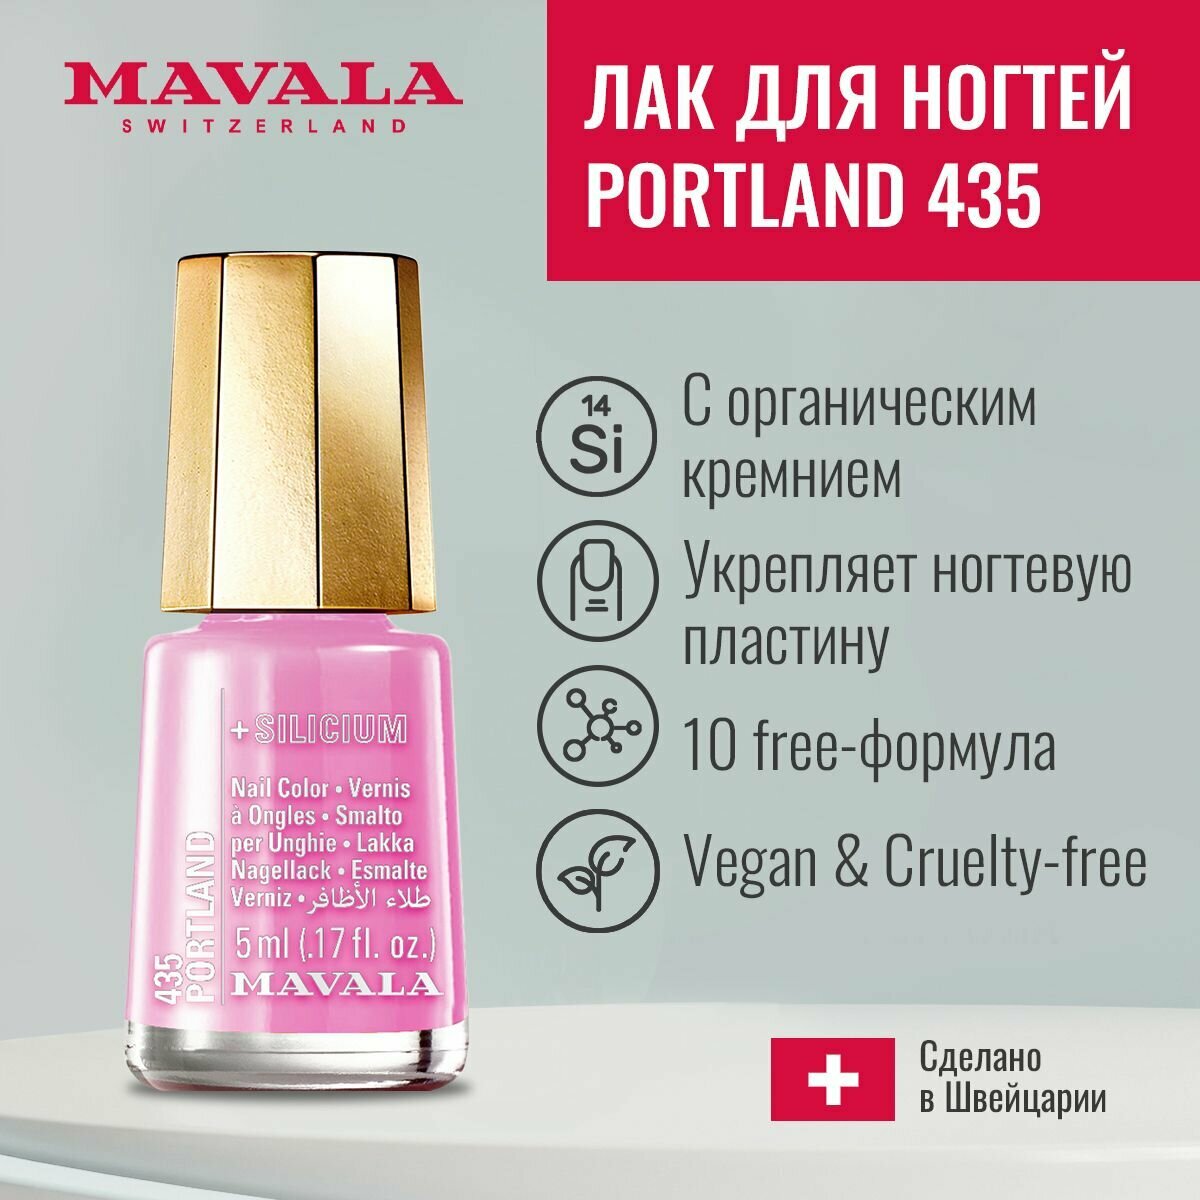 Лак для ногтей с кремнием 435 Portland Mavala Tandem and Digital Mini Color Nail Polish